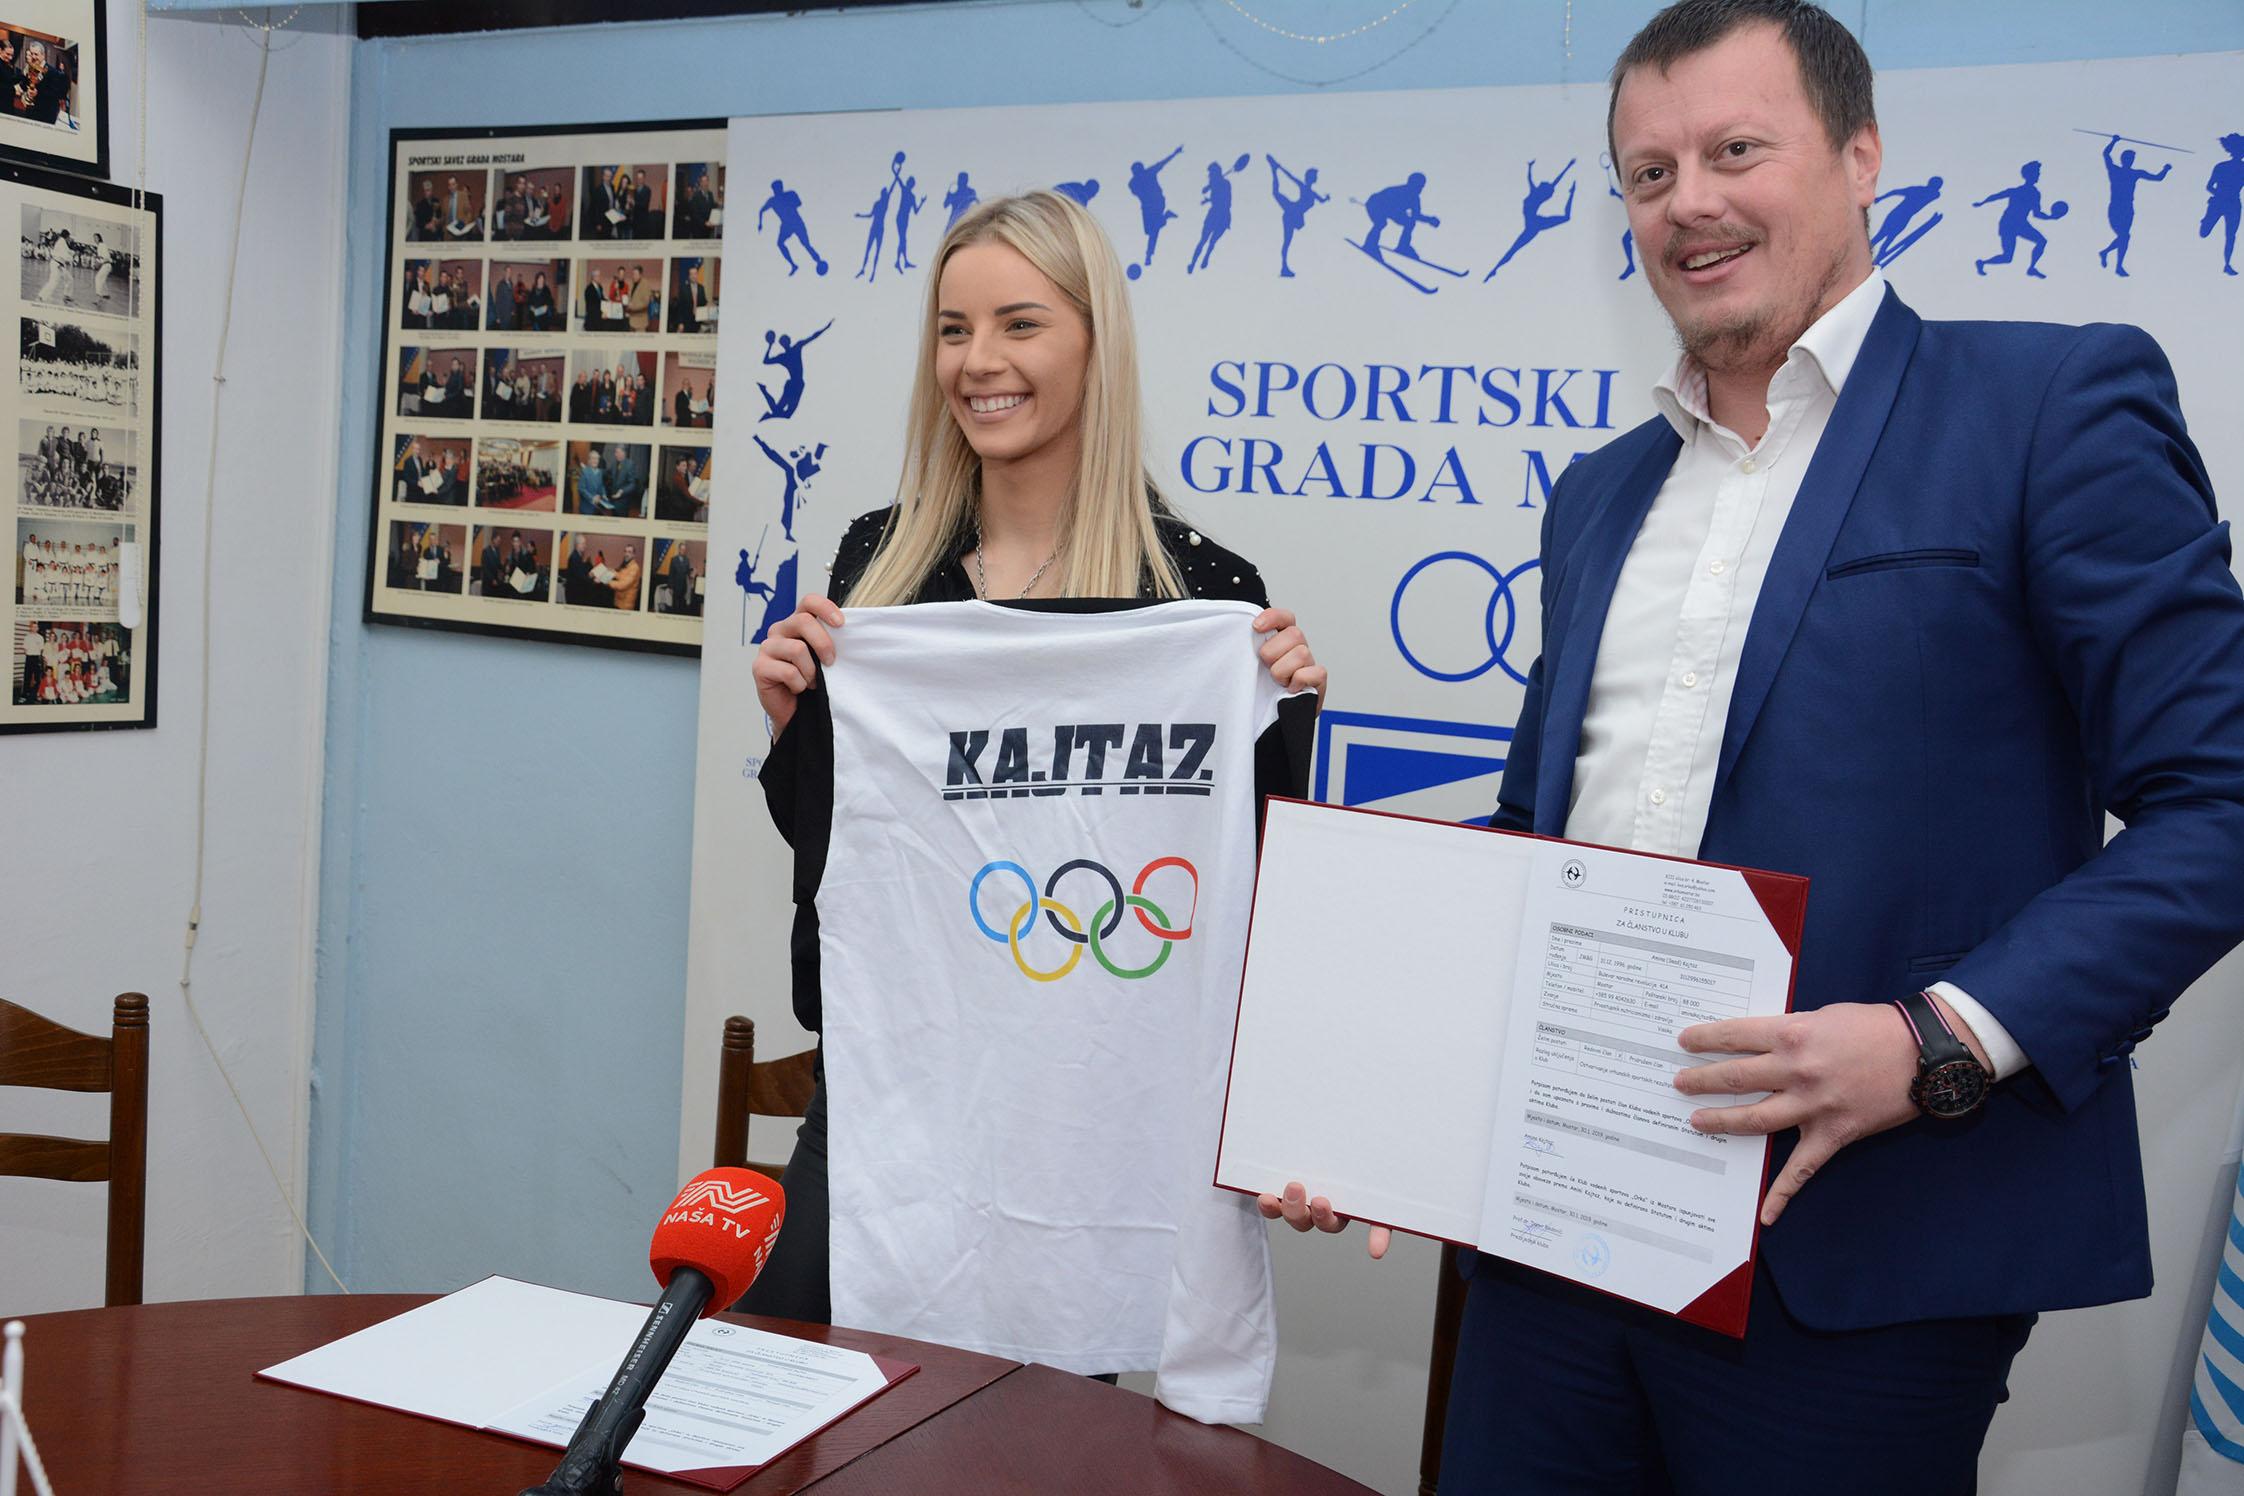 Sportski savez grada Mostara: Kajtaz potpisala ugovor s KVS Orka - Avaz